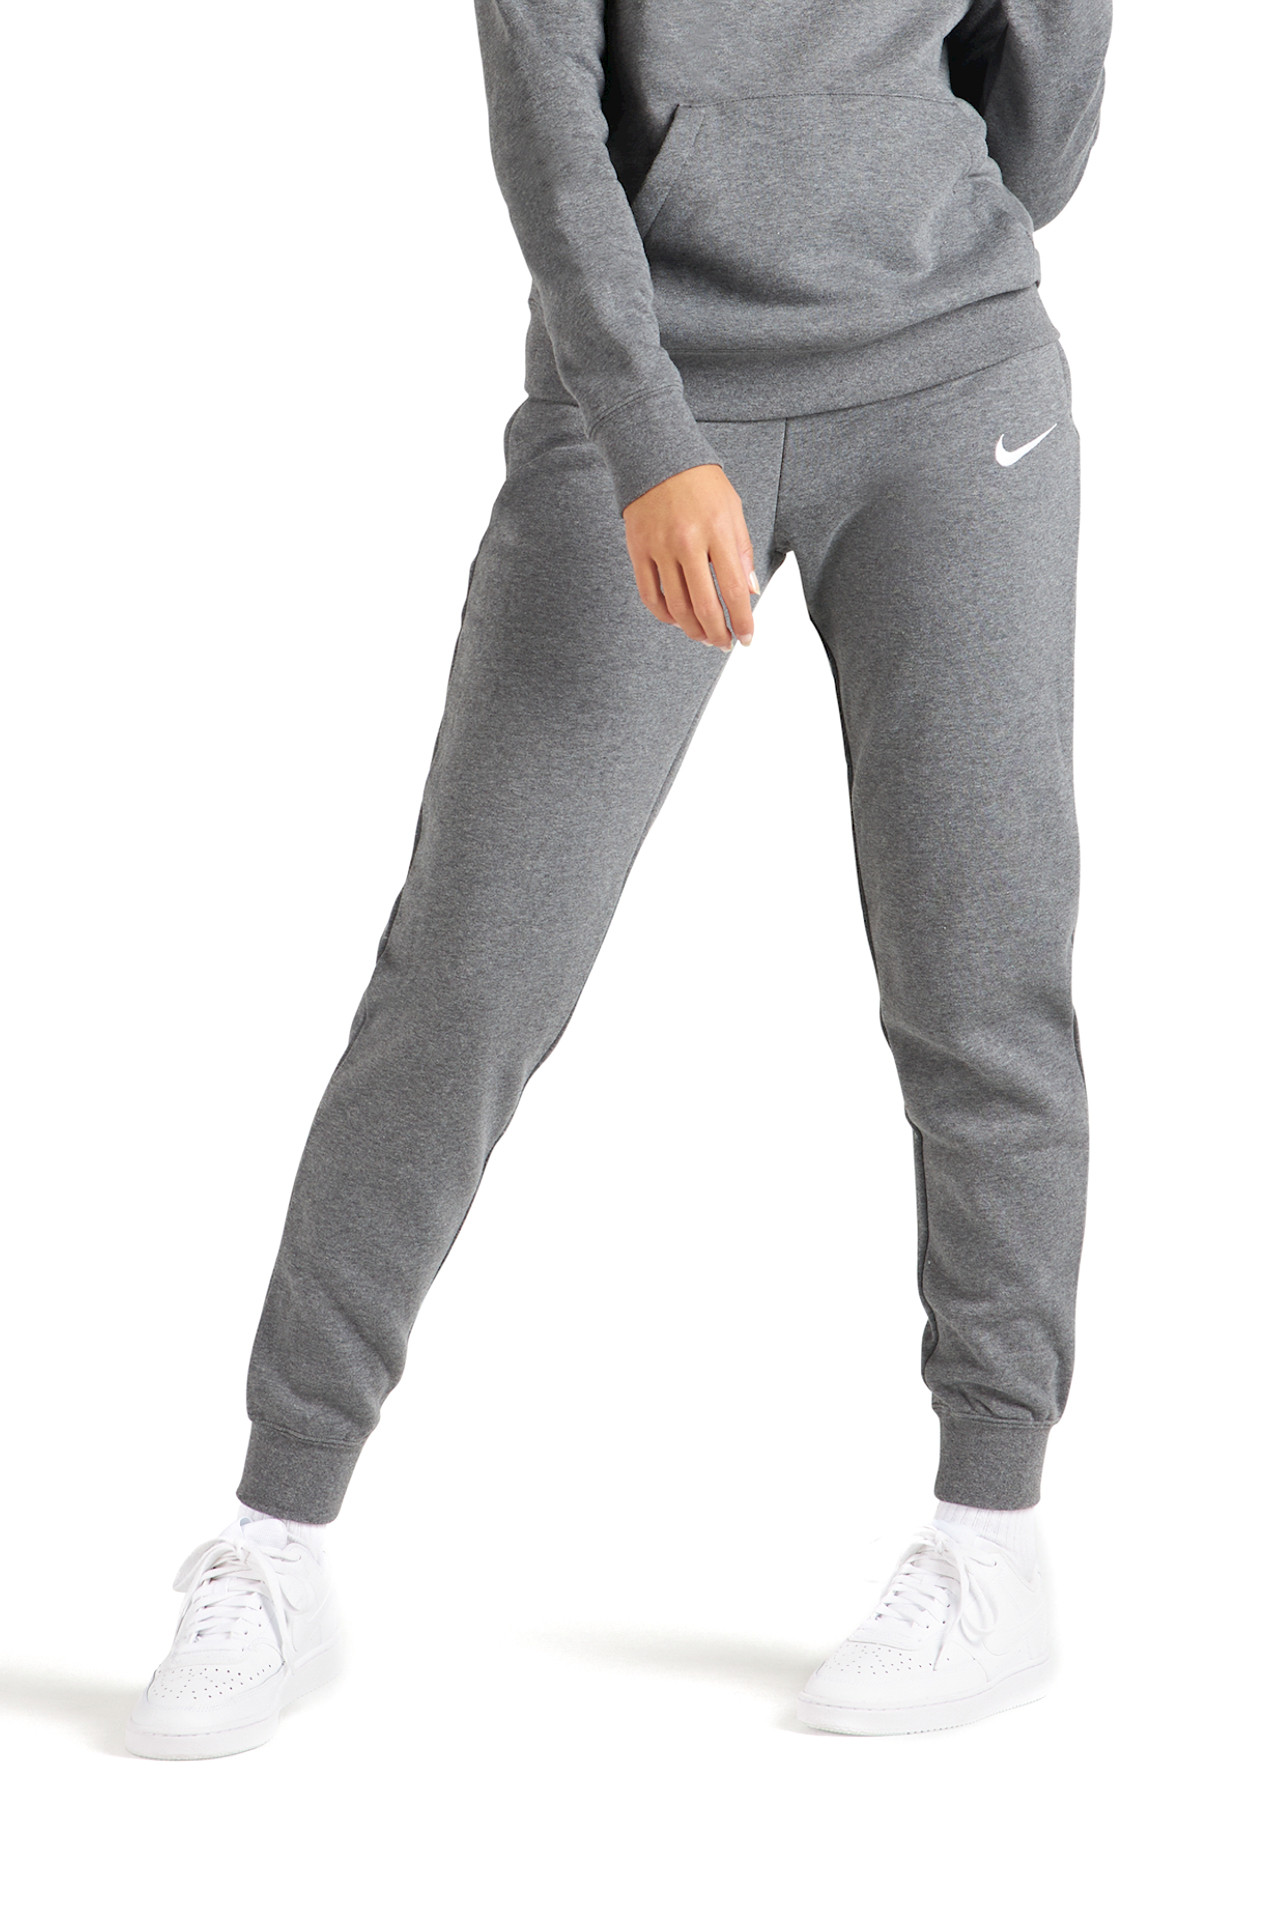 Adviser calm down Lean Pantalon de trening Nike pentru Femei Wmns Fleece Pants CW6961_071